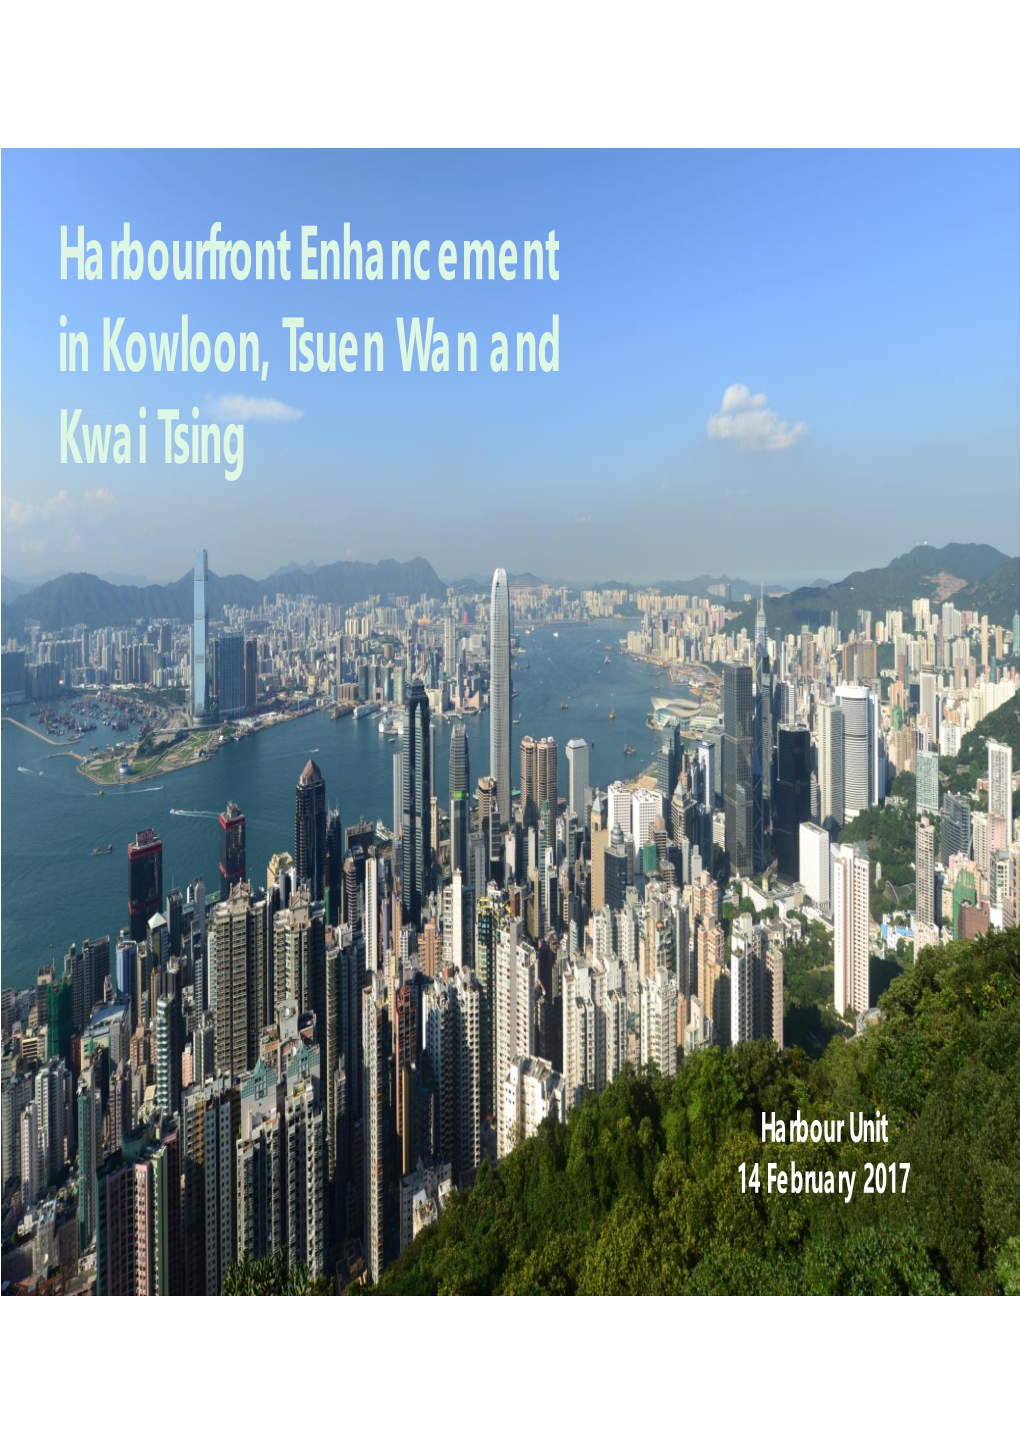 Harbourfront Enhancement in Kowloon, Tsuen Wan and Kwai Tsing